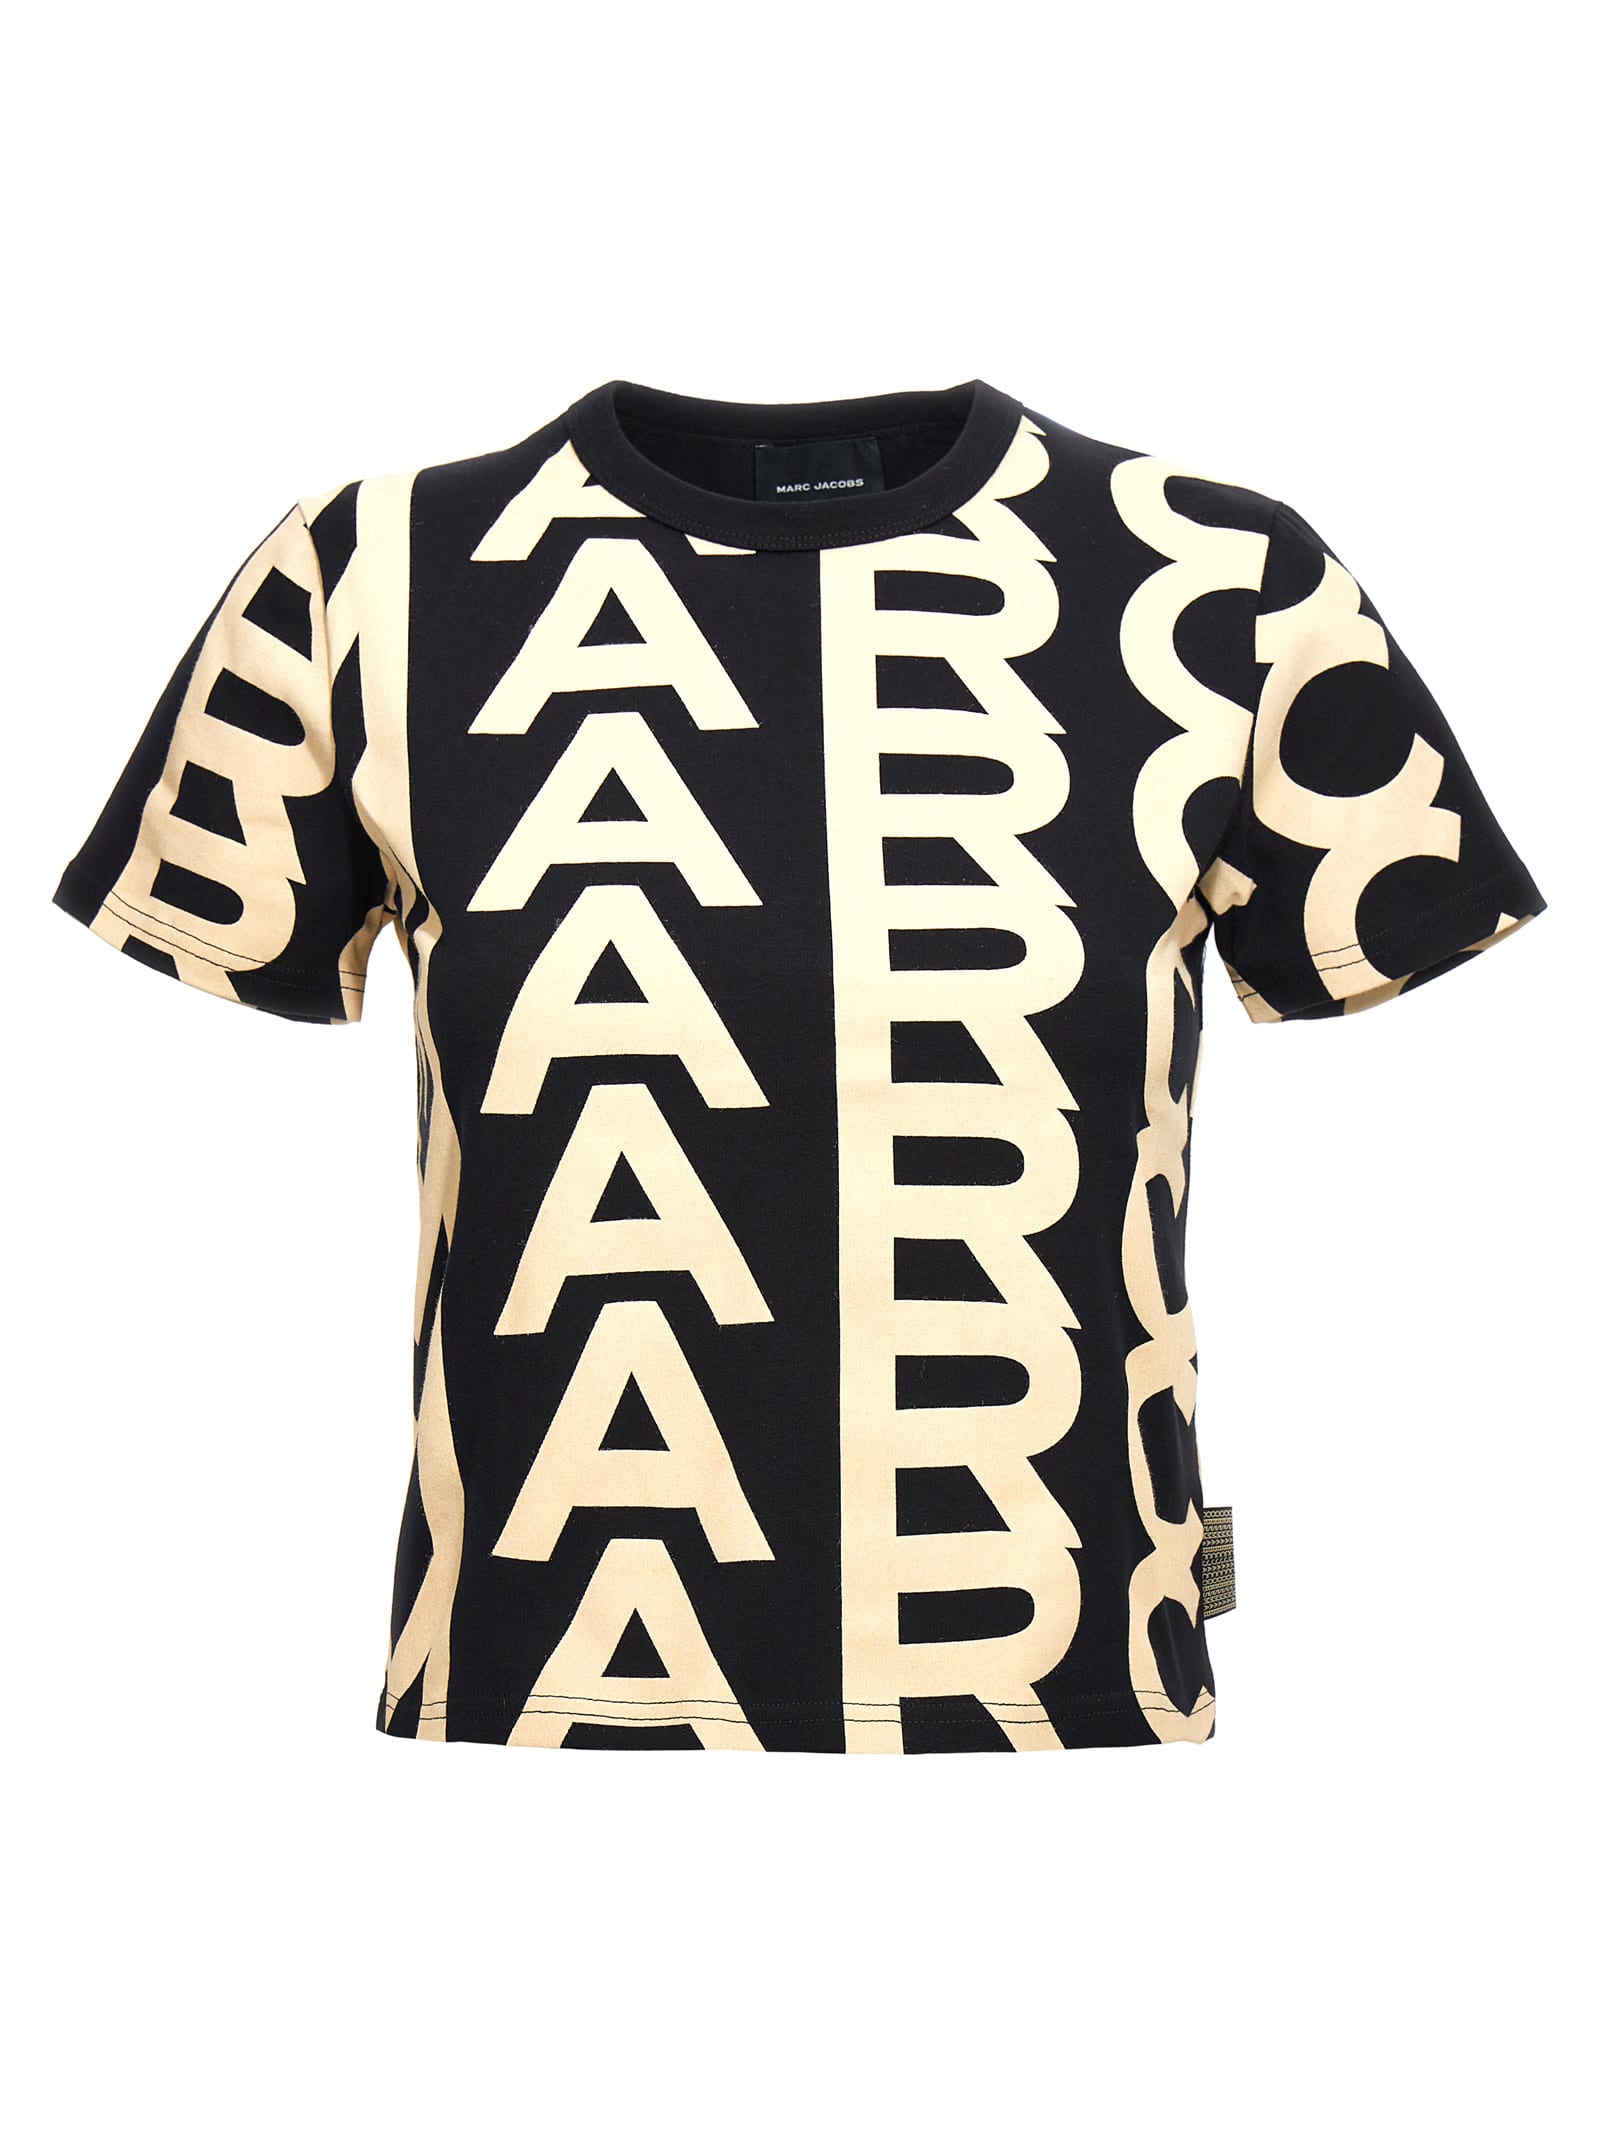 Marc Jacobs monogram T-shirt